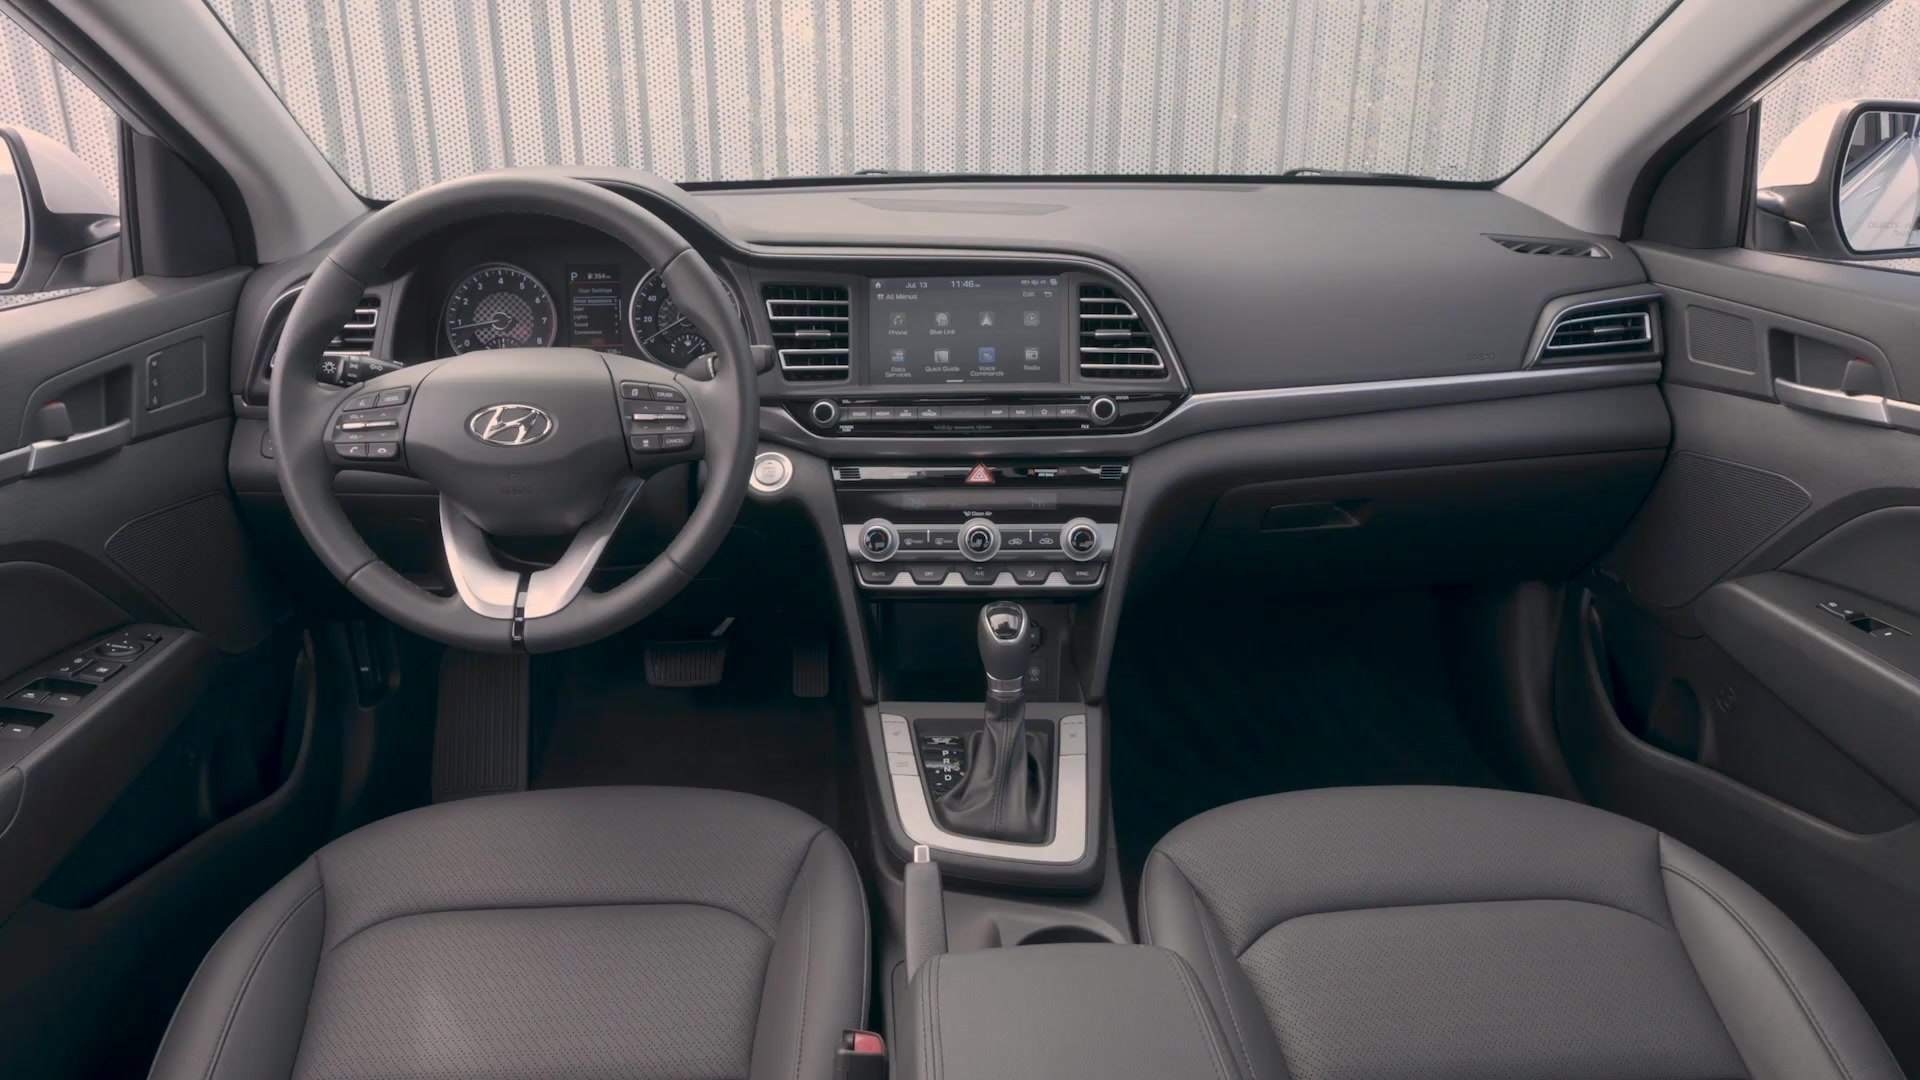 2020 Hyundai Elantra Interior Design